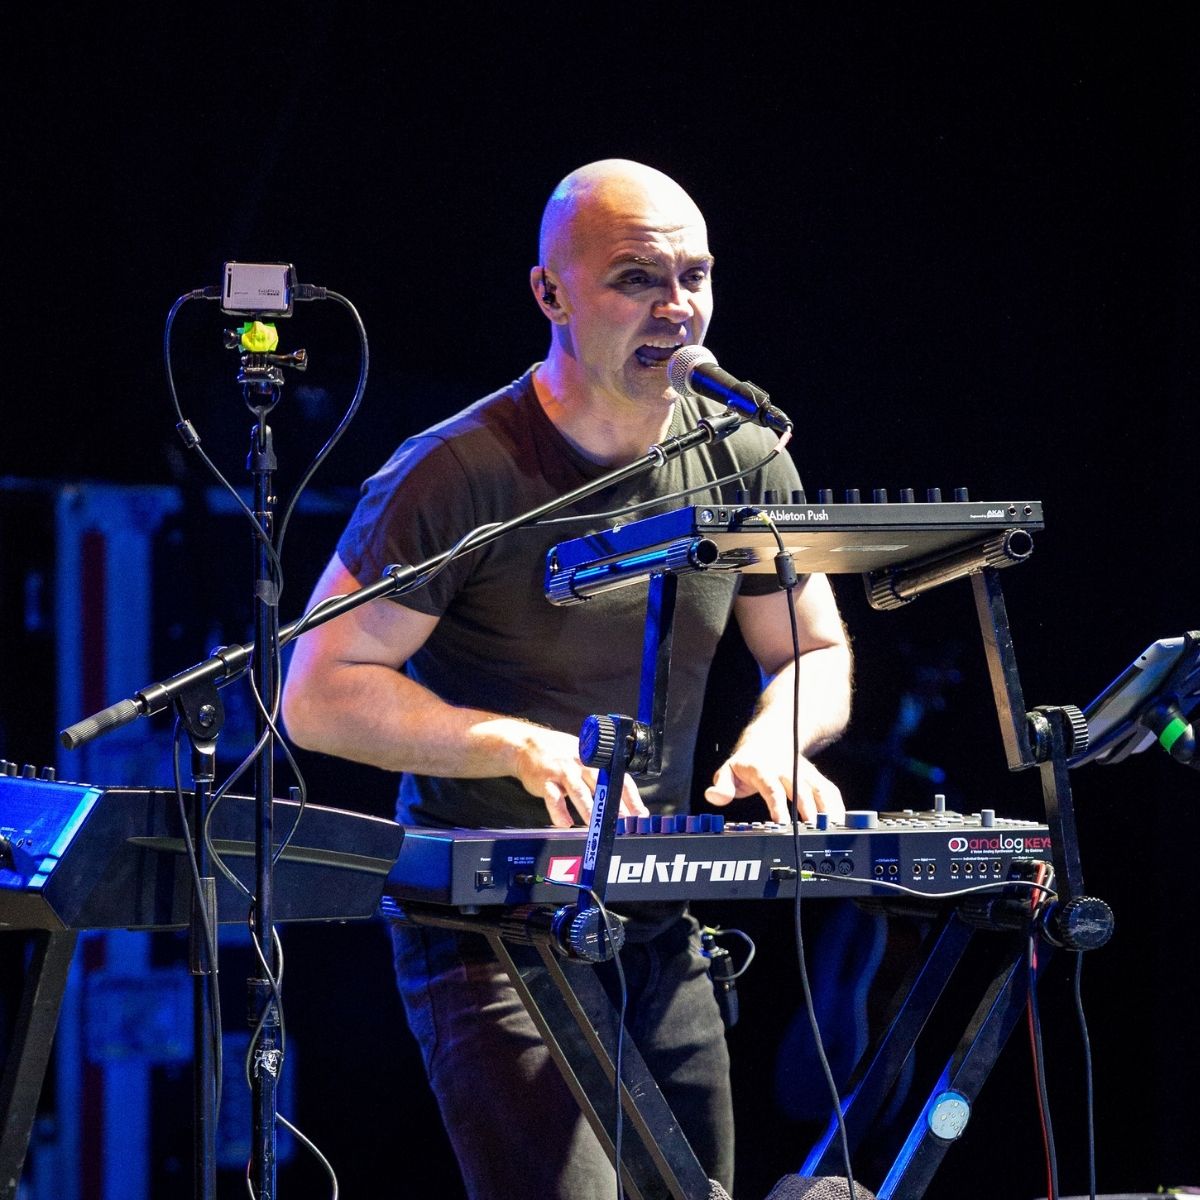 Konstantin Shumailov performs at a concert